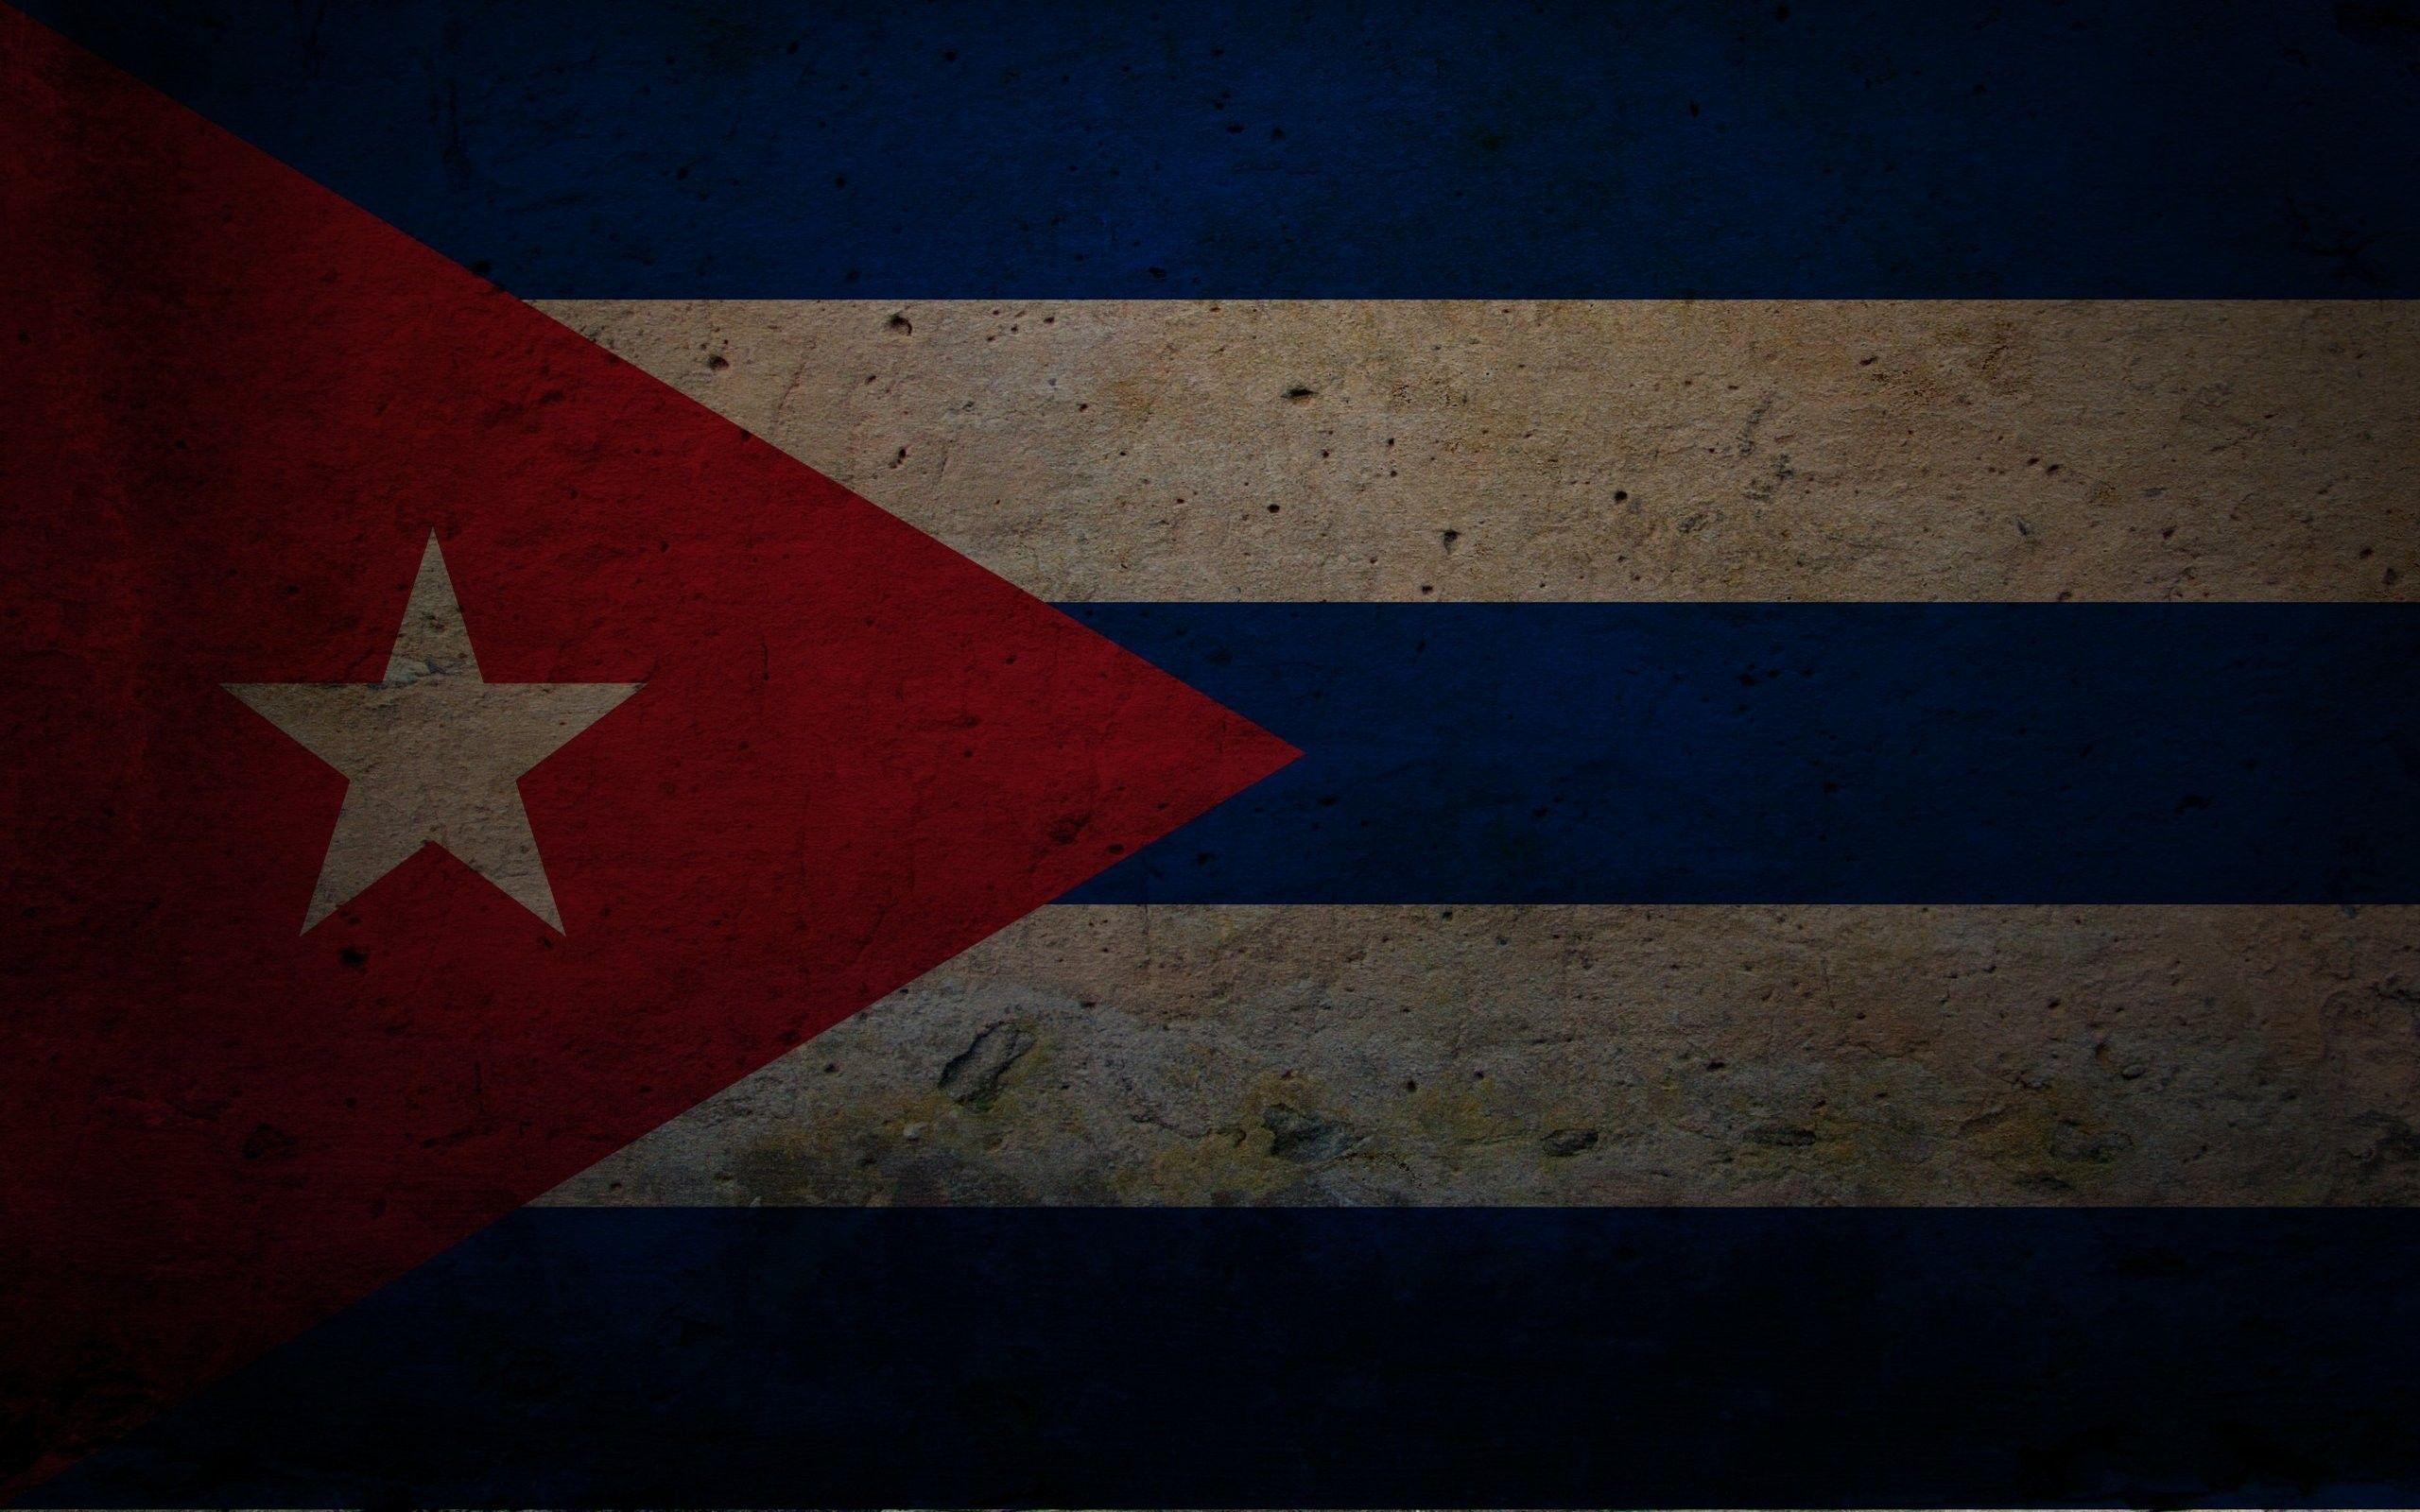 2029 Cuban Flag Wallpaper Images Stock Photos  Vectors  Shutterstock